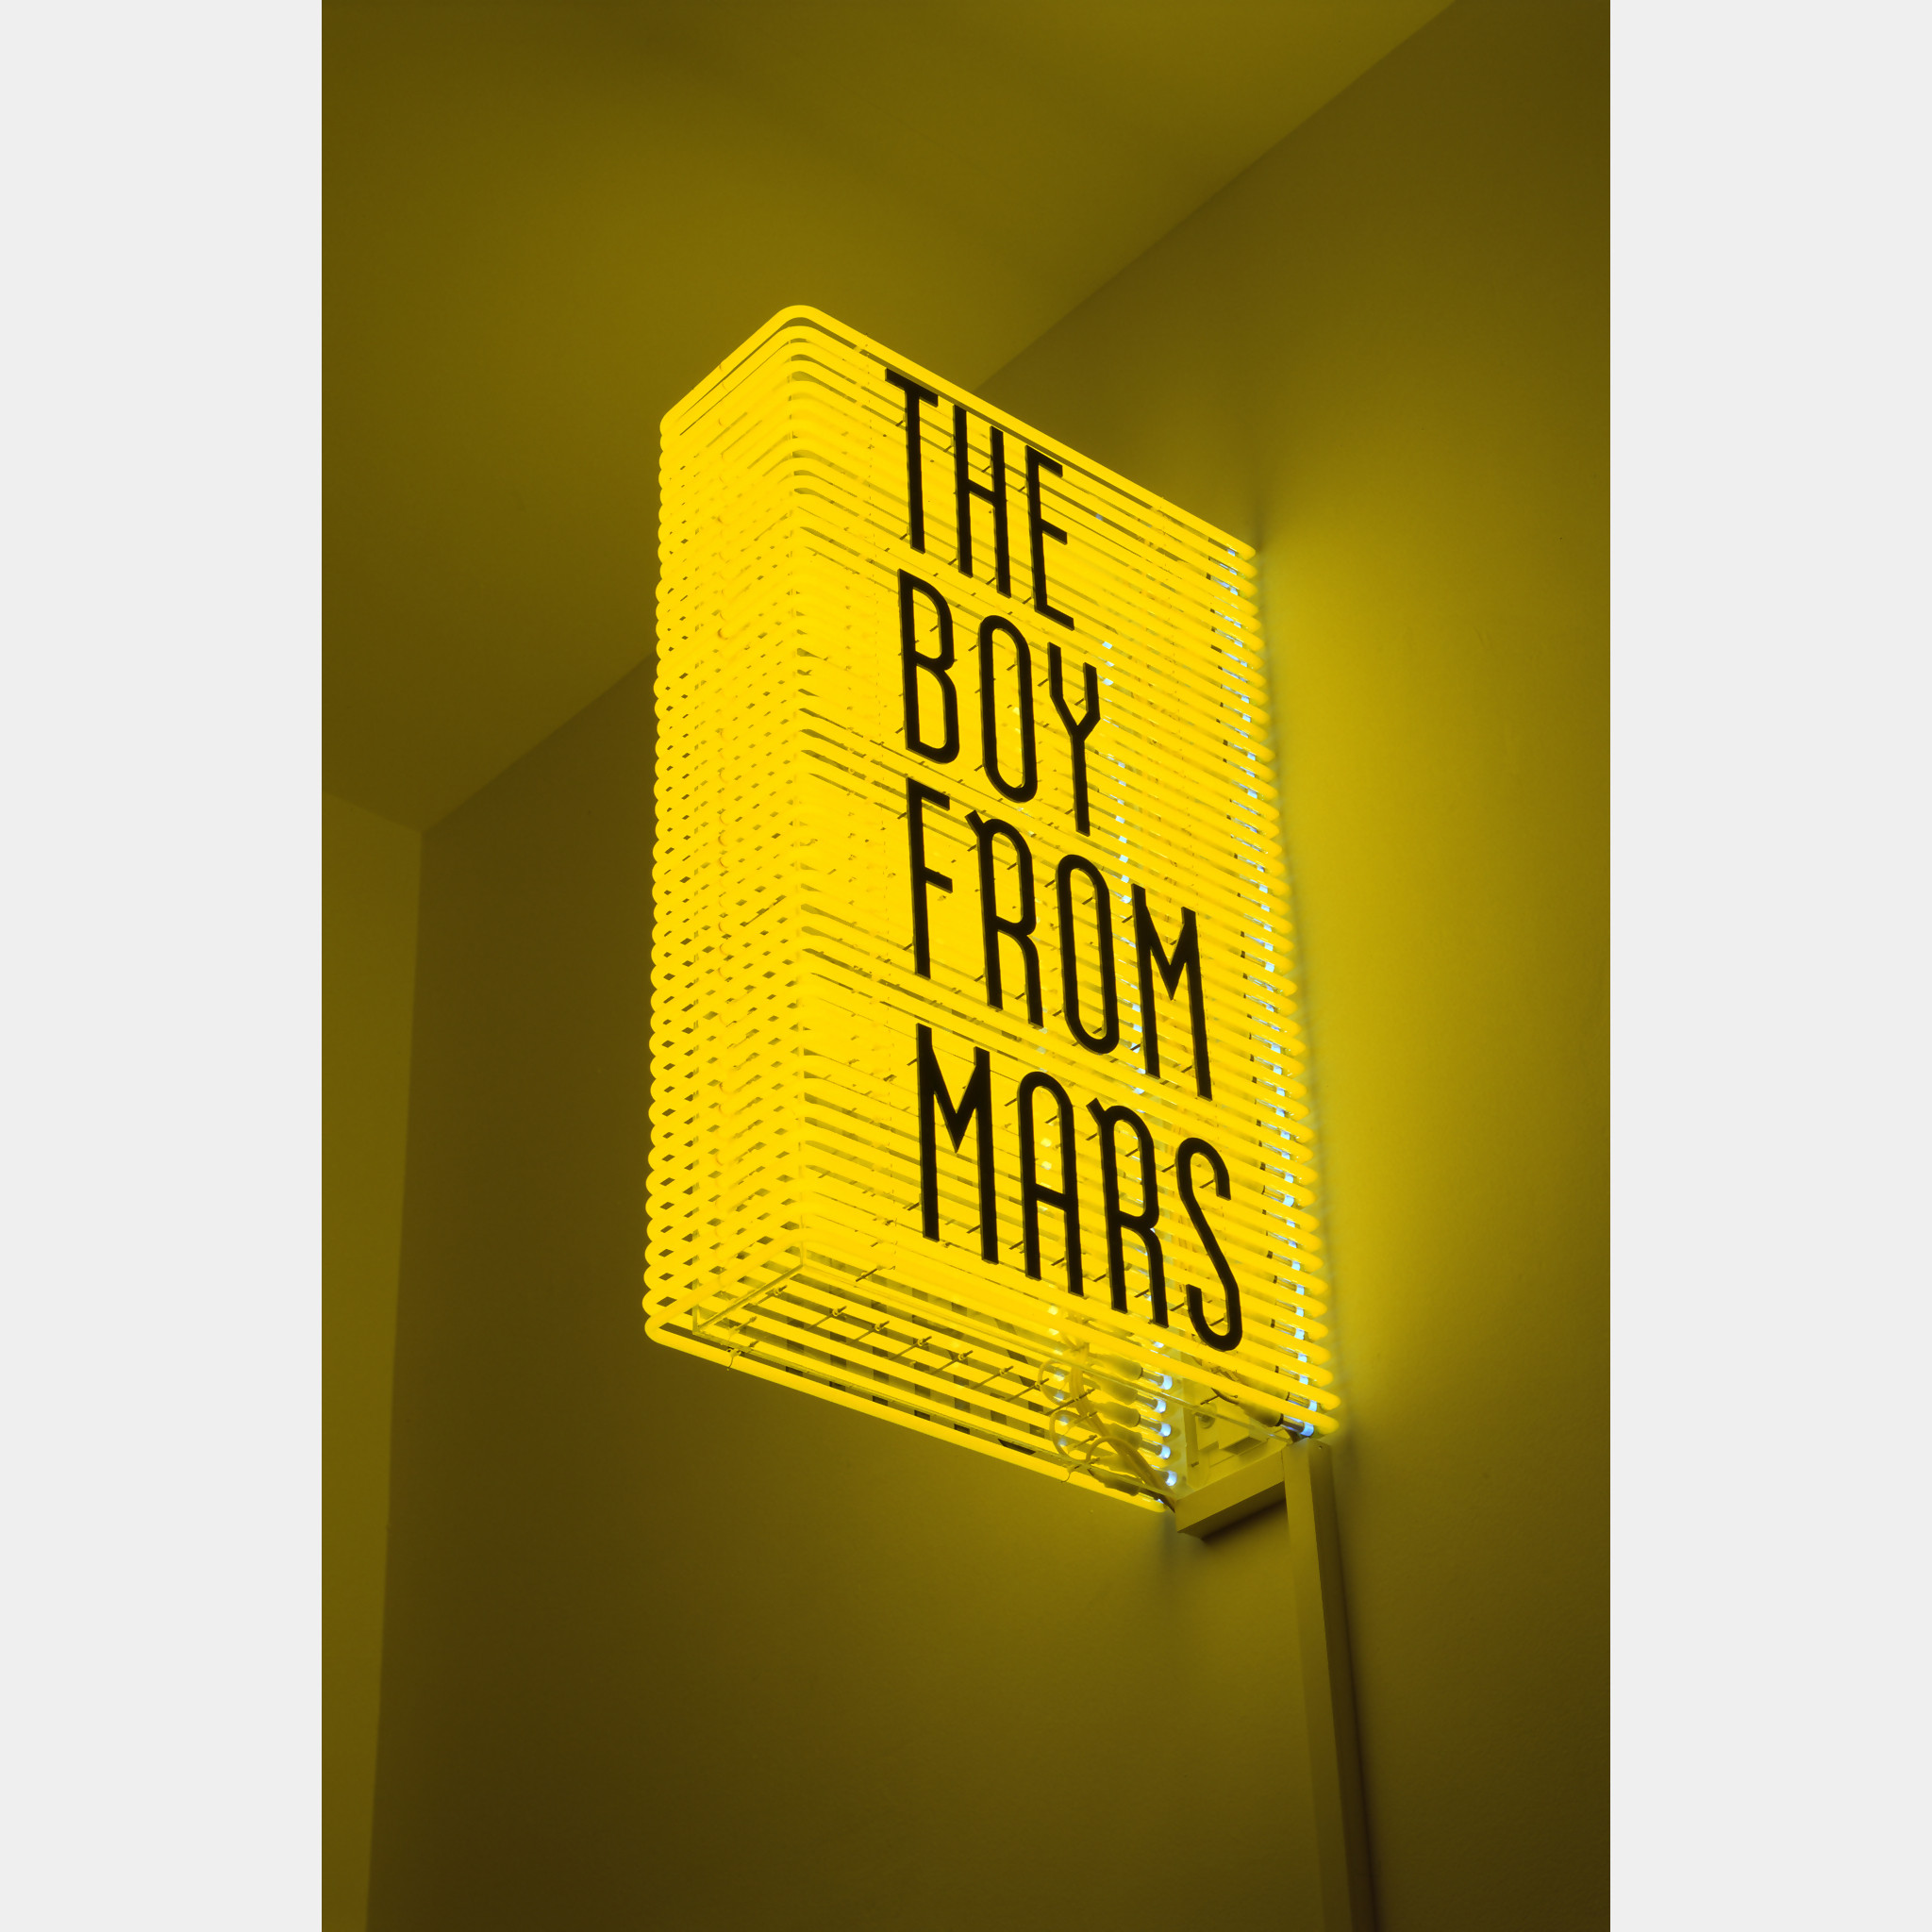 Philippe Parreno, The Boy From Mars, 2005, 44 neon tubes, metal, transparent plexiglass, 5 transformators, cables, 148 x 90.2 x 41.9 cm